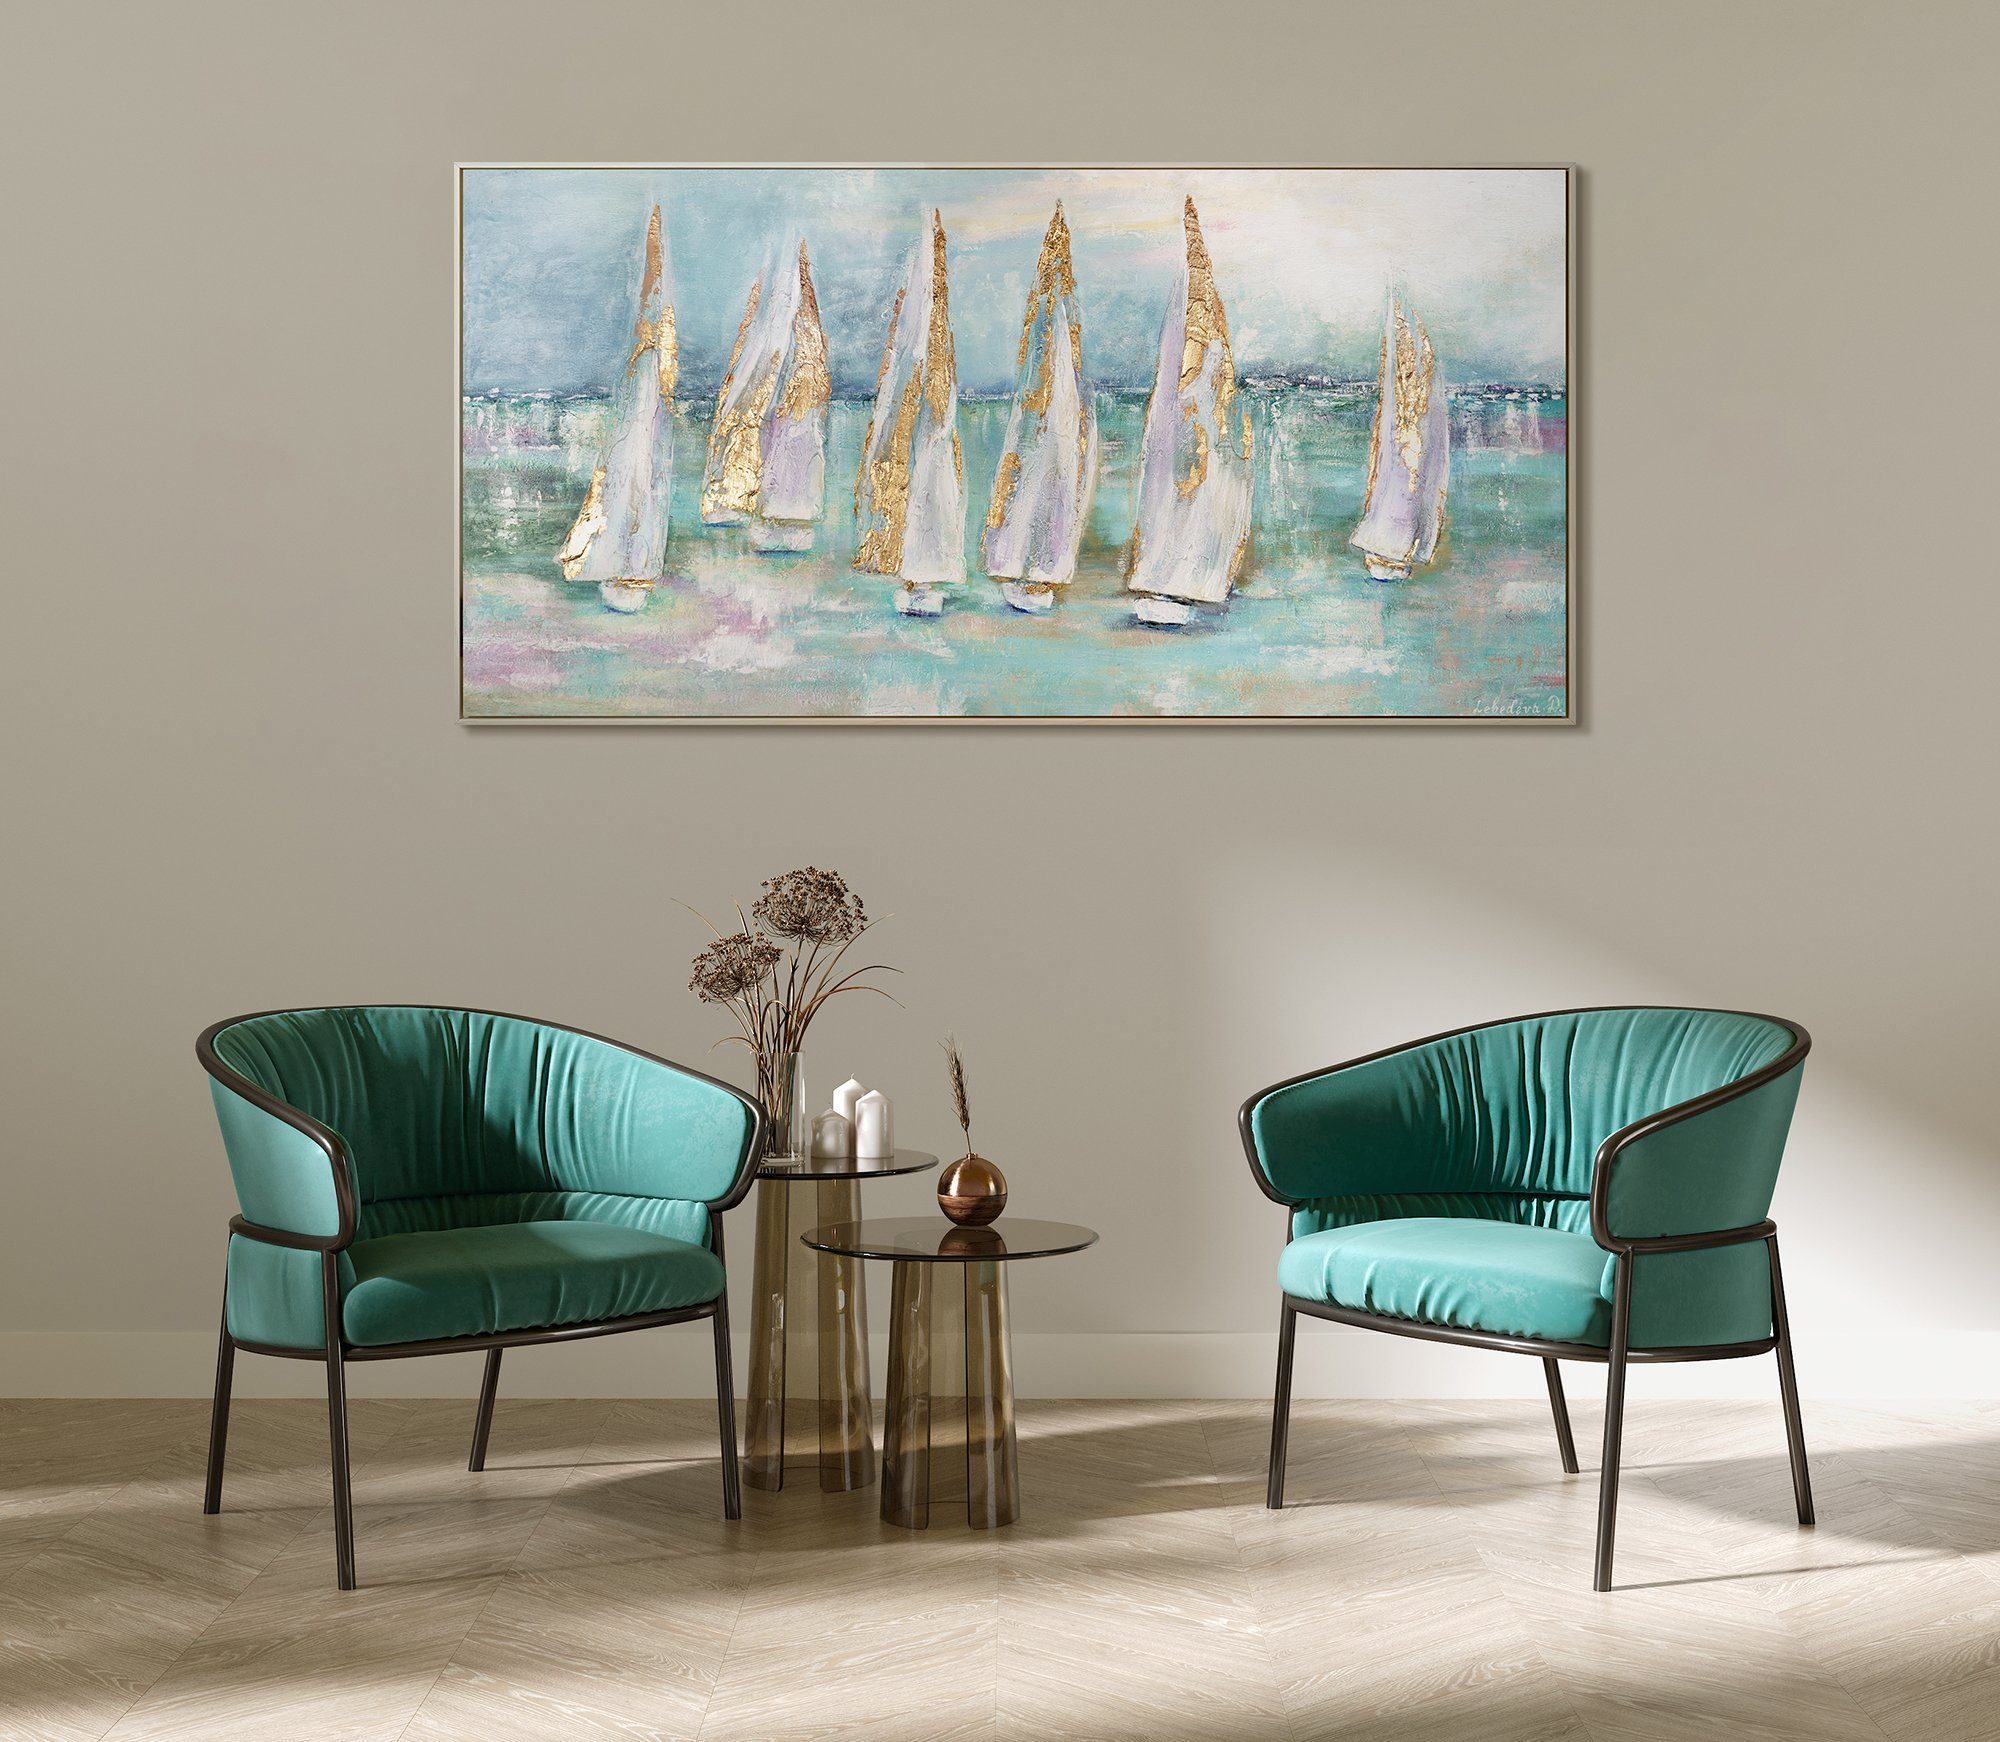 Bild Gold Handgemalt Leinwand Meer Gemälde Meer, in YS-Art Segelboote, Rahmen Türkis Segelboote am Mit Beige